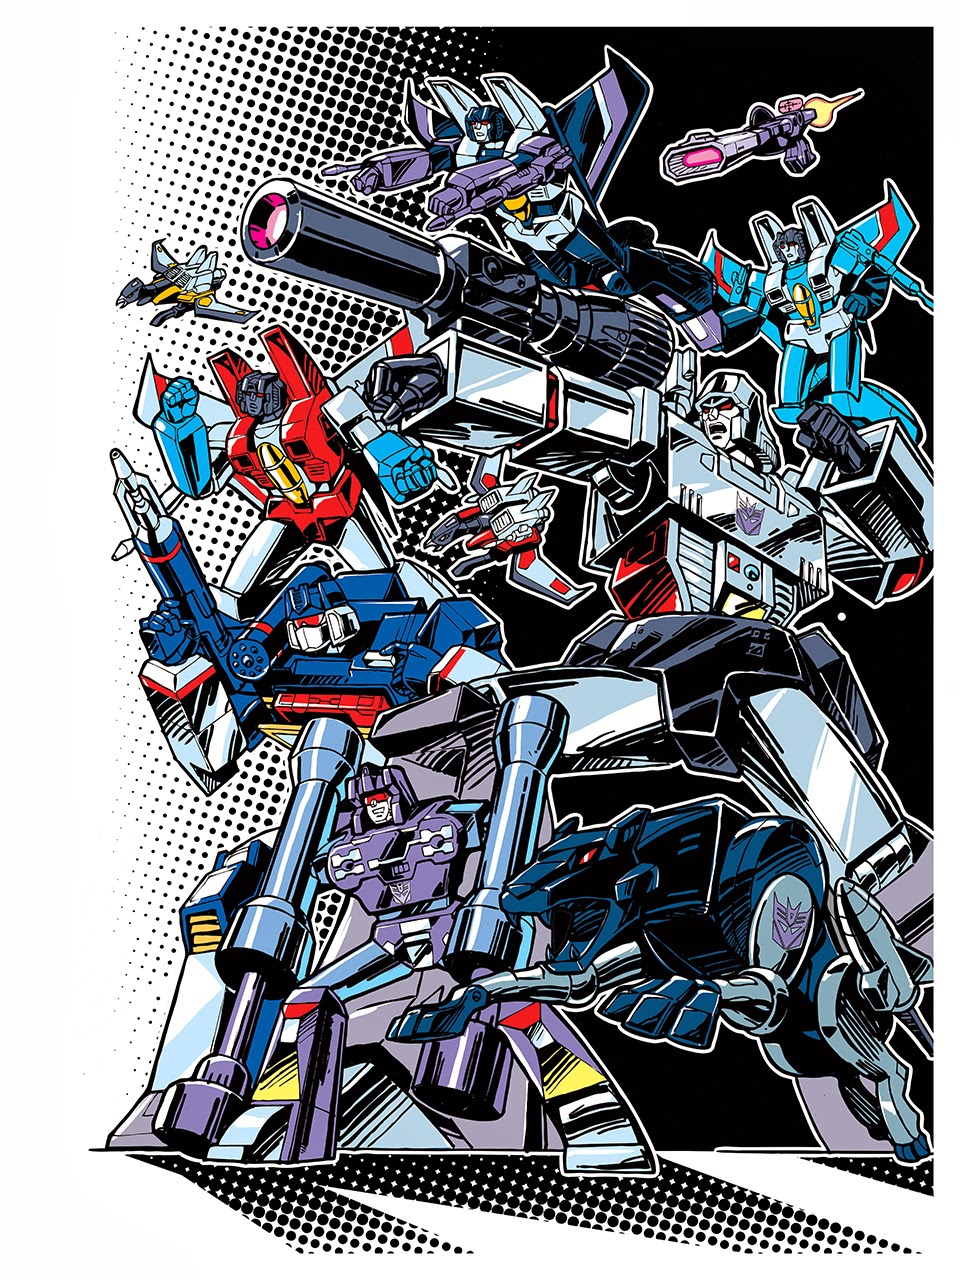 “Decepticons” Transformers 30th Anniversary Giclee Print by Guido Guidi